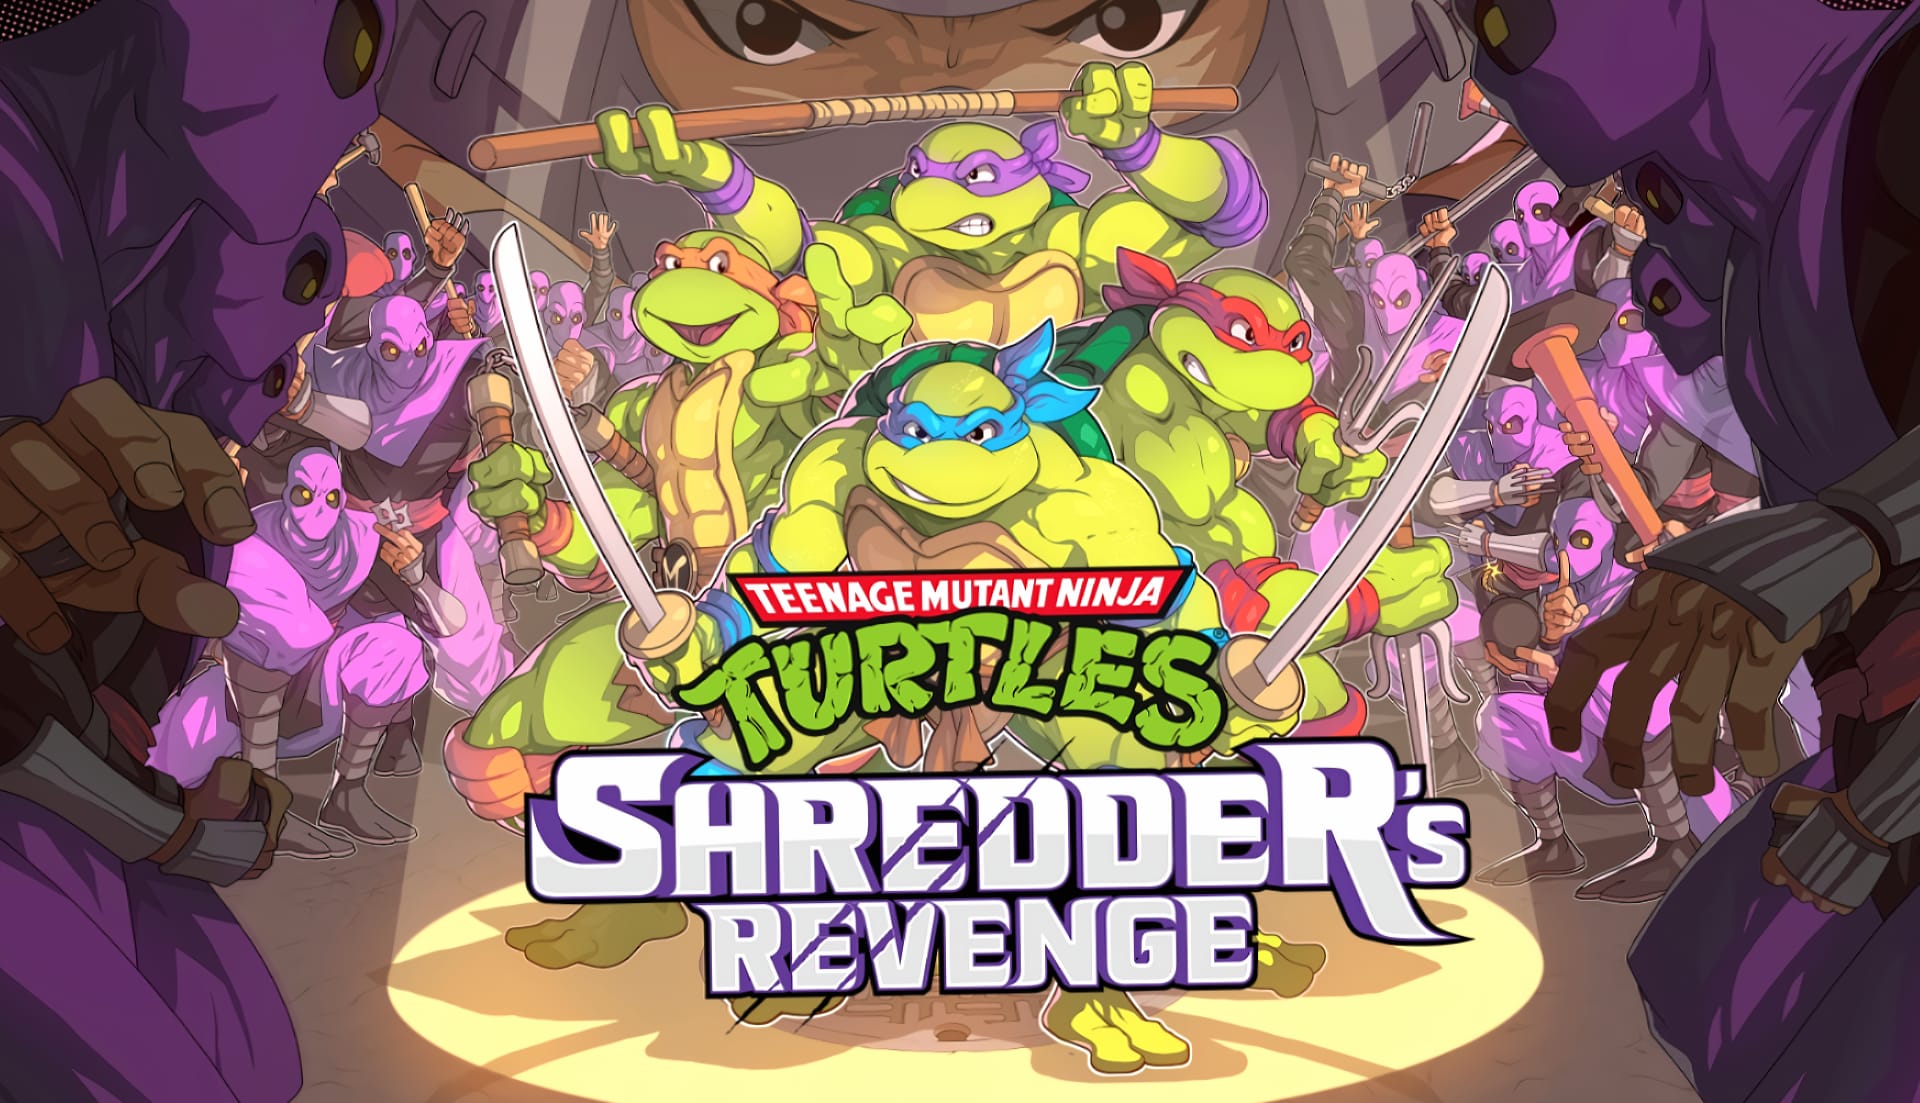 Teenage Mutant Ninja Turtles Shredders Revenge at 2048 x 2048 iPad size wallpapers HD quality